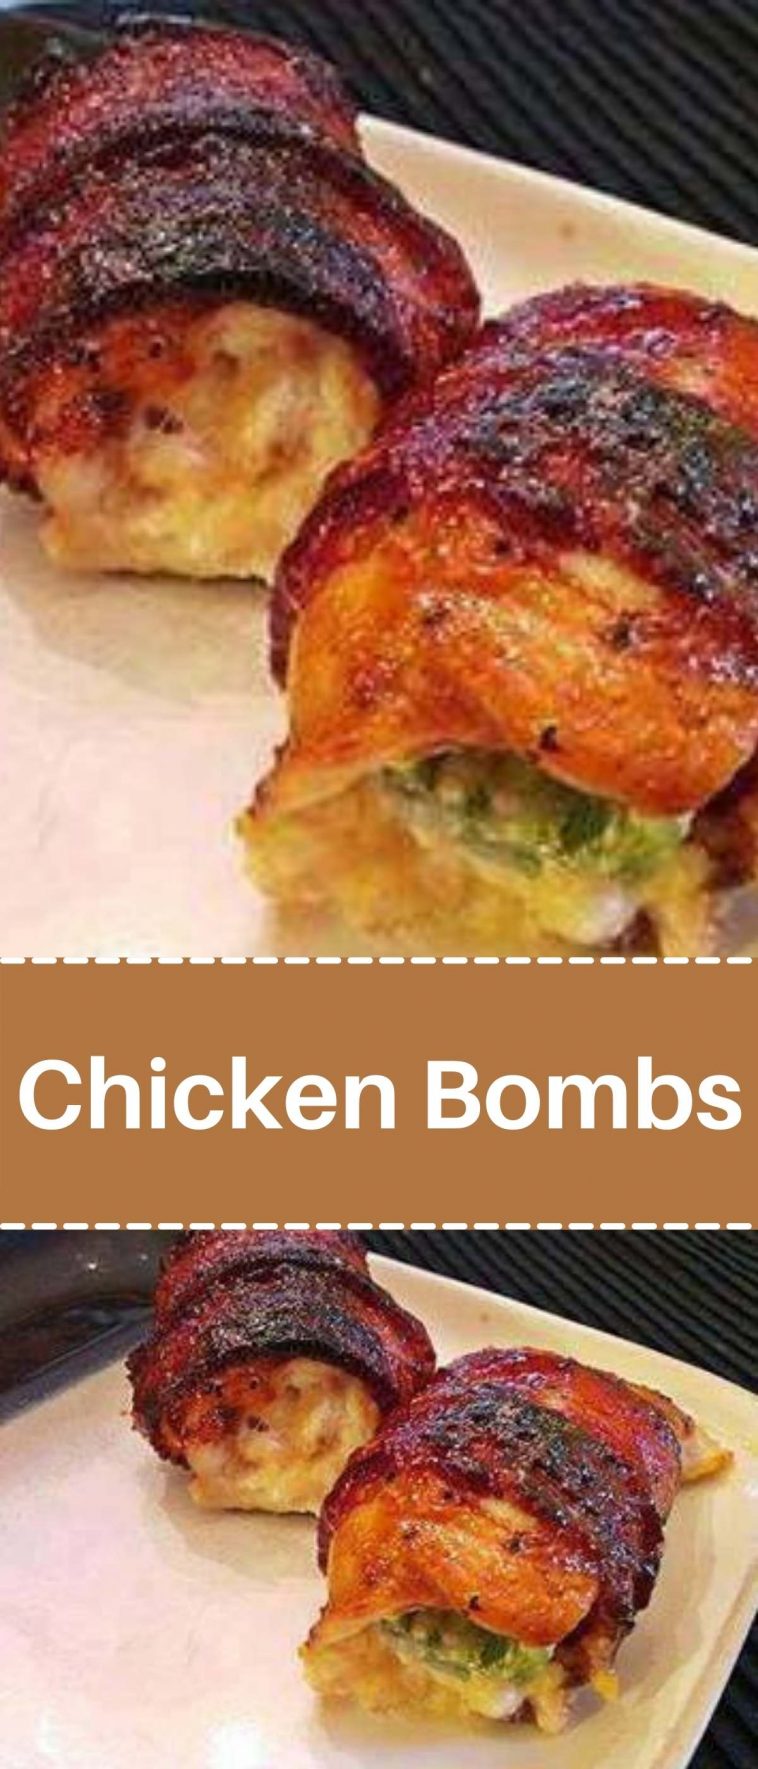 Chicken Bombs